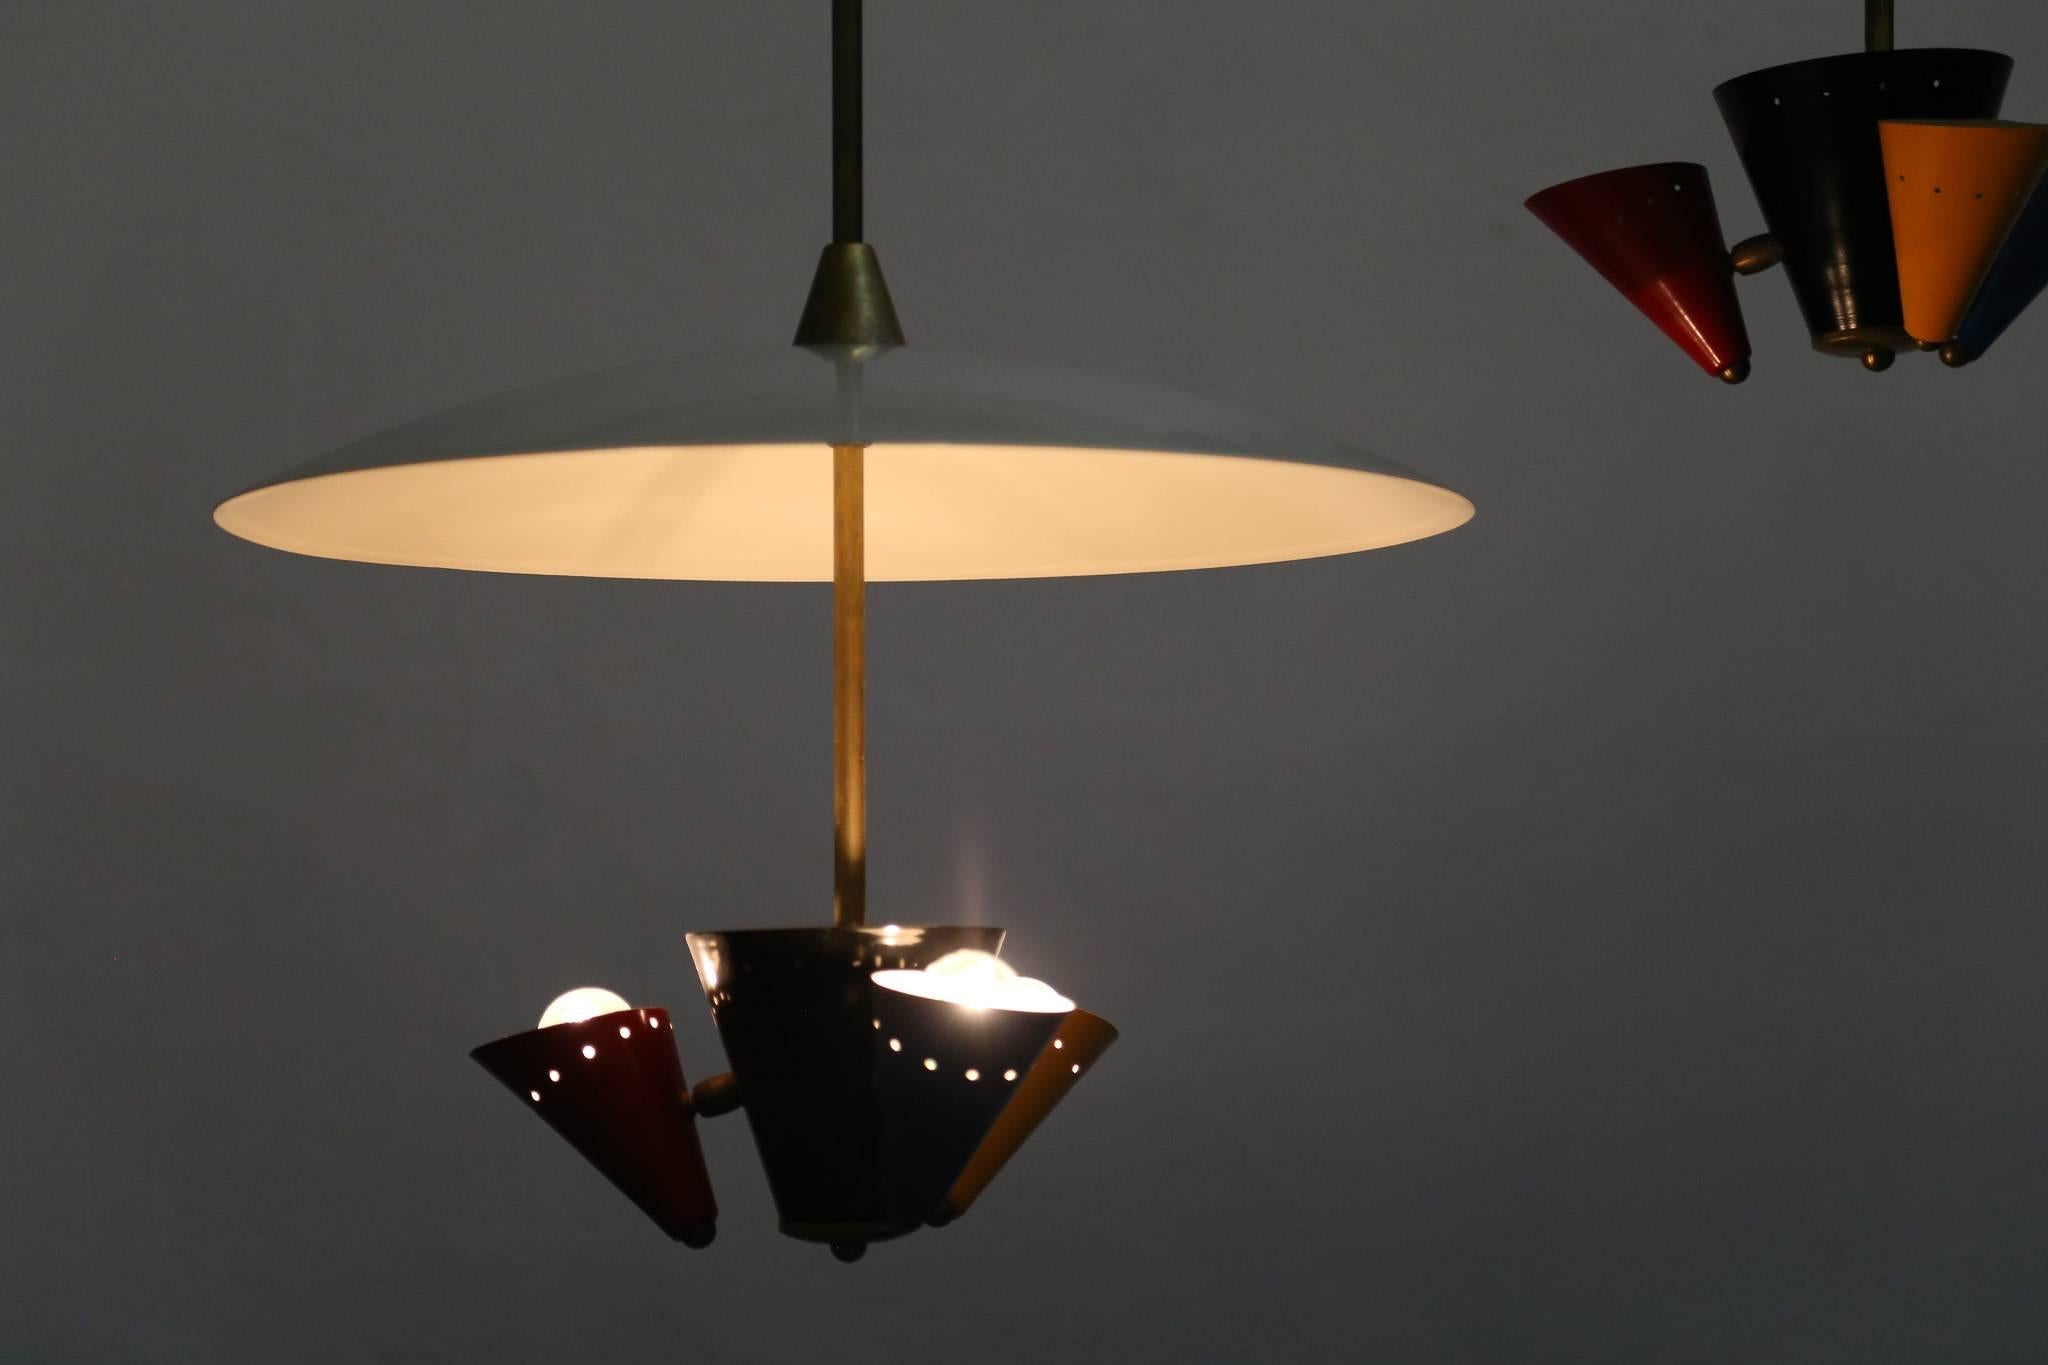 Pendant Lamp in the Style of Gino Sarfatti 1950s Stilnovo 1